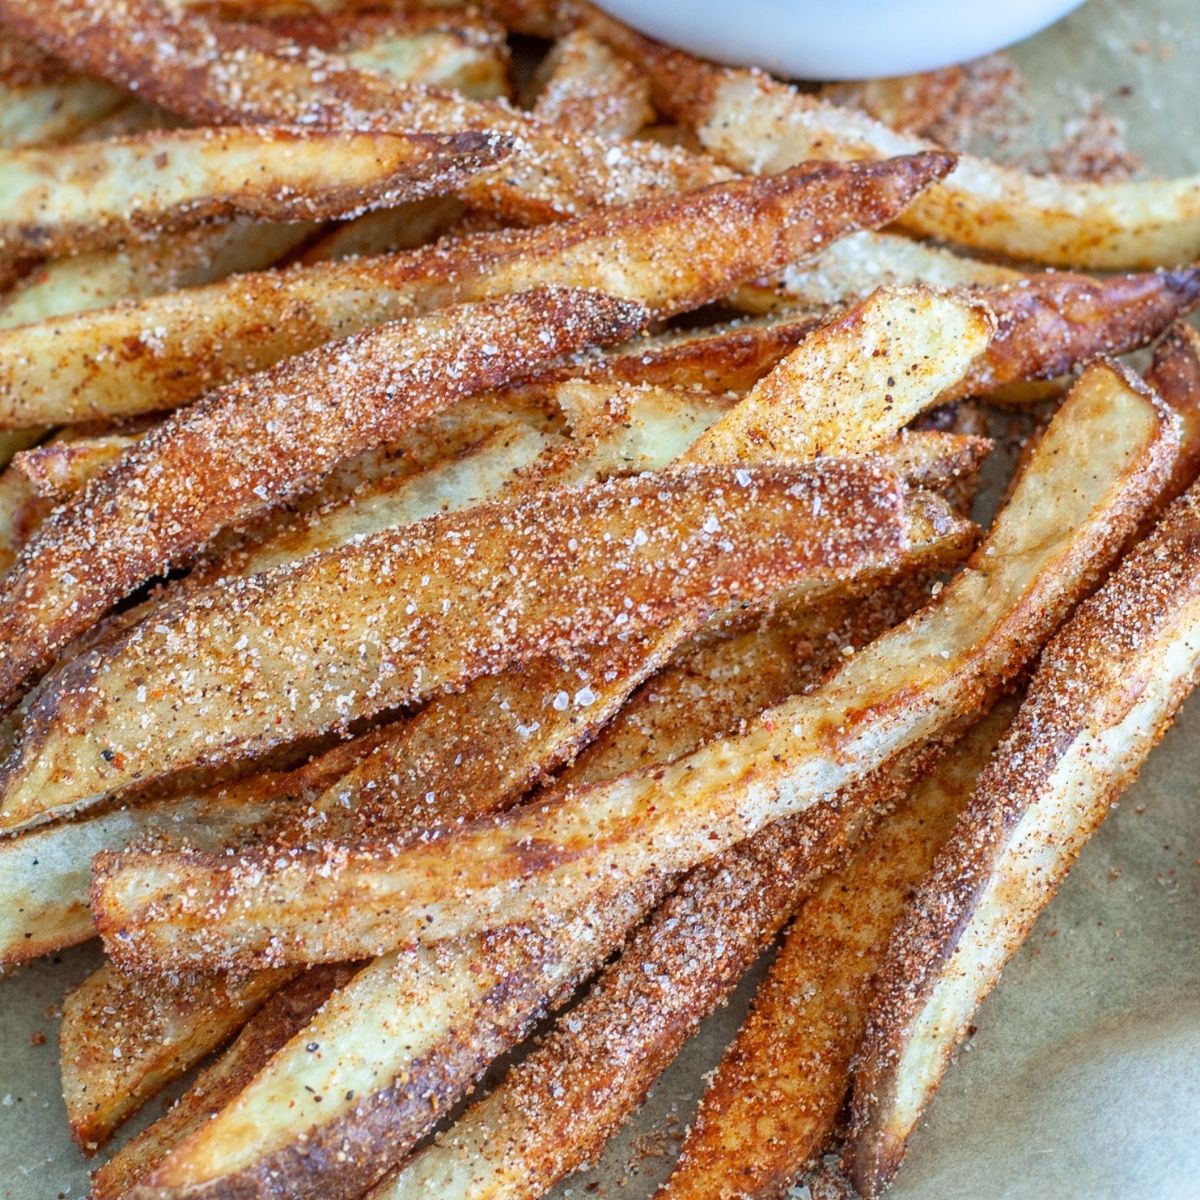 https://www.foodlovinfamily.com/wp-content/uploads/2021/05/Wingstop-fries-recipe.jpg